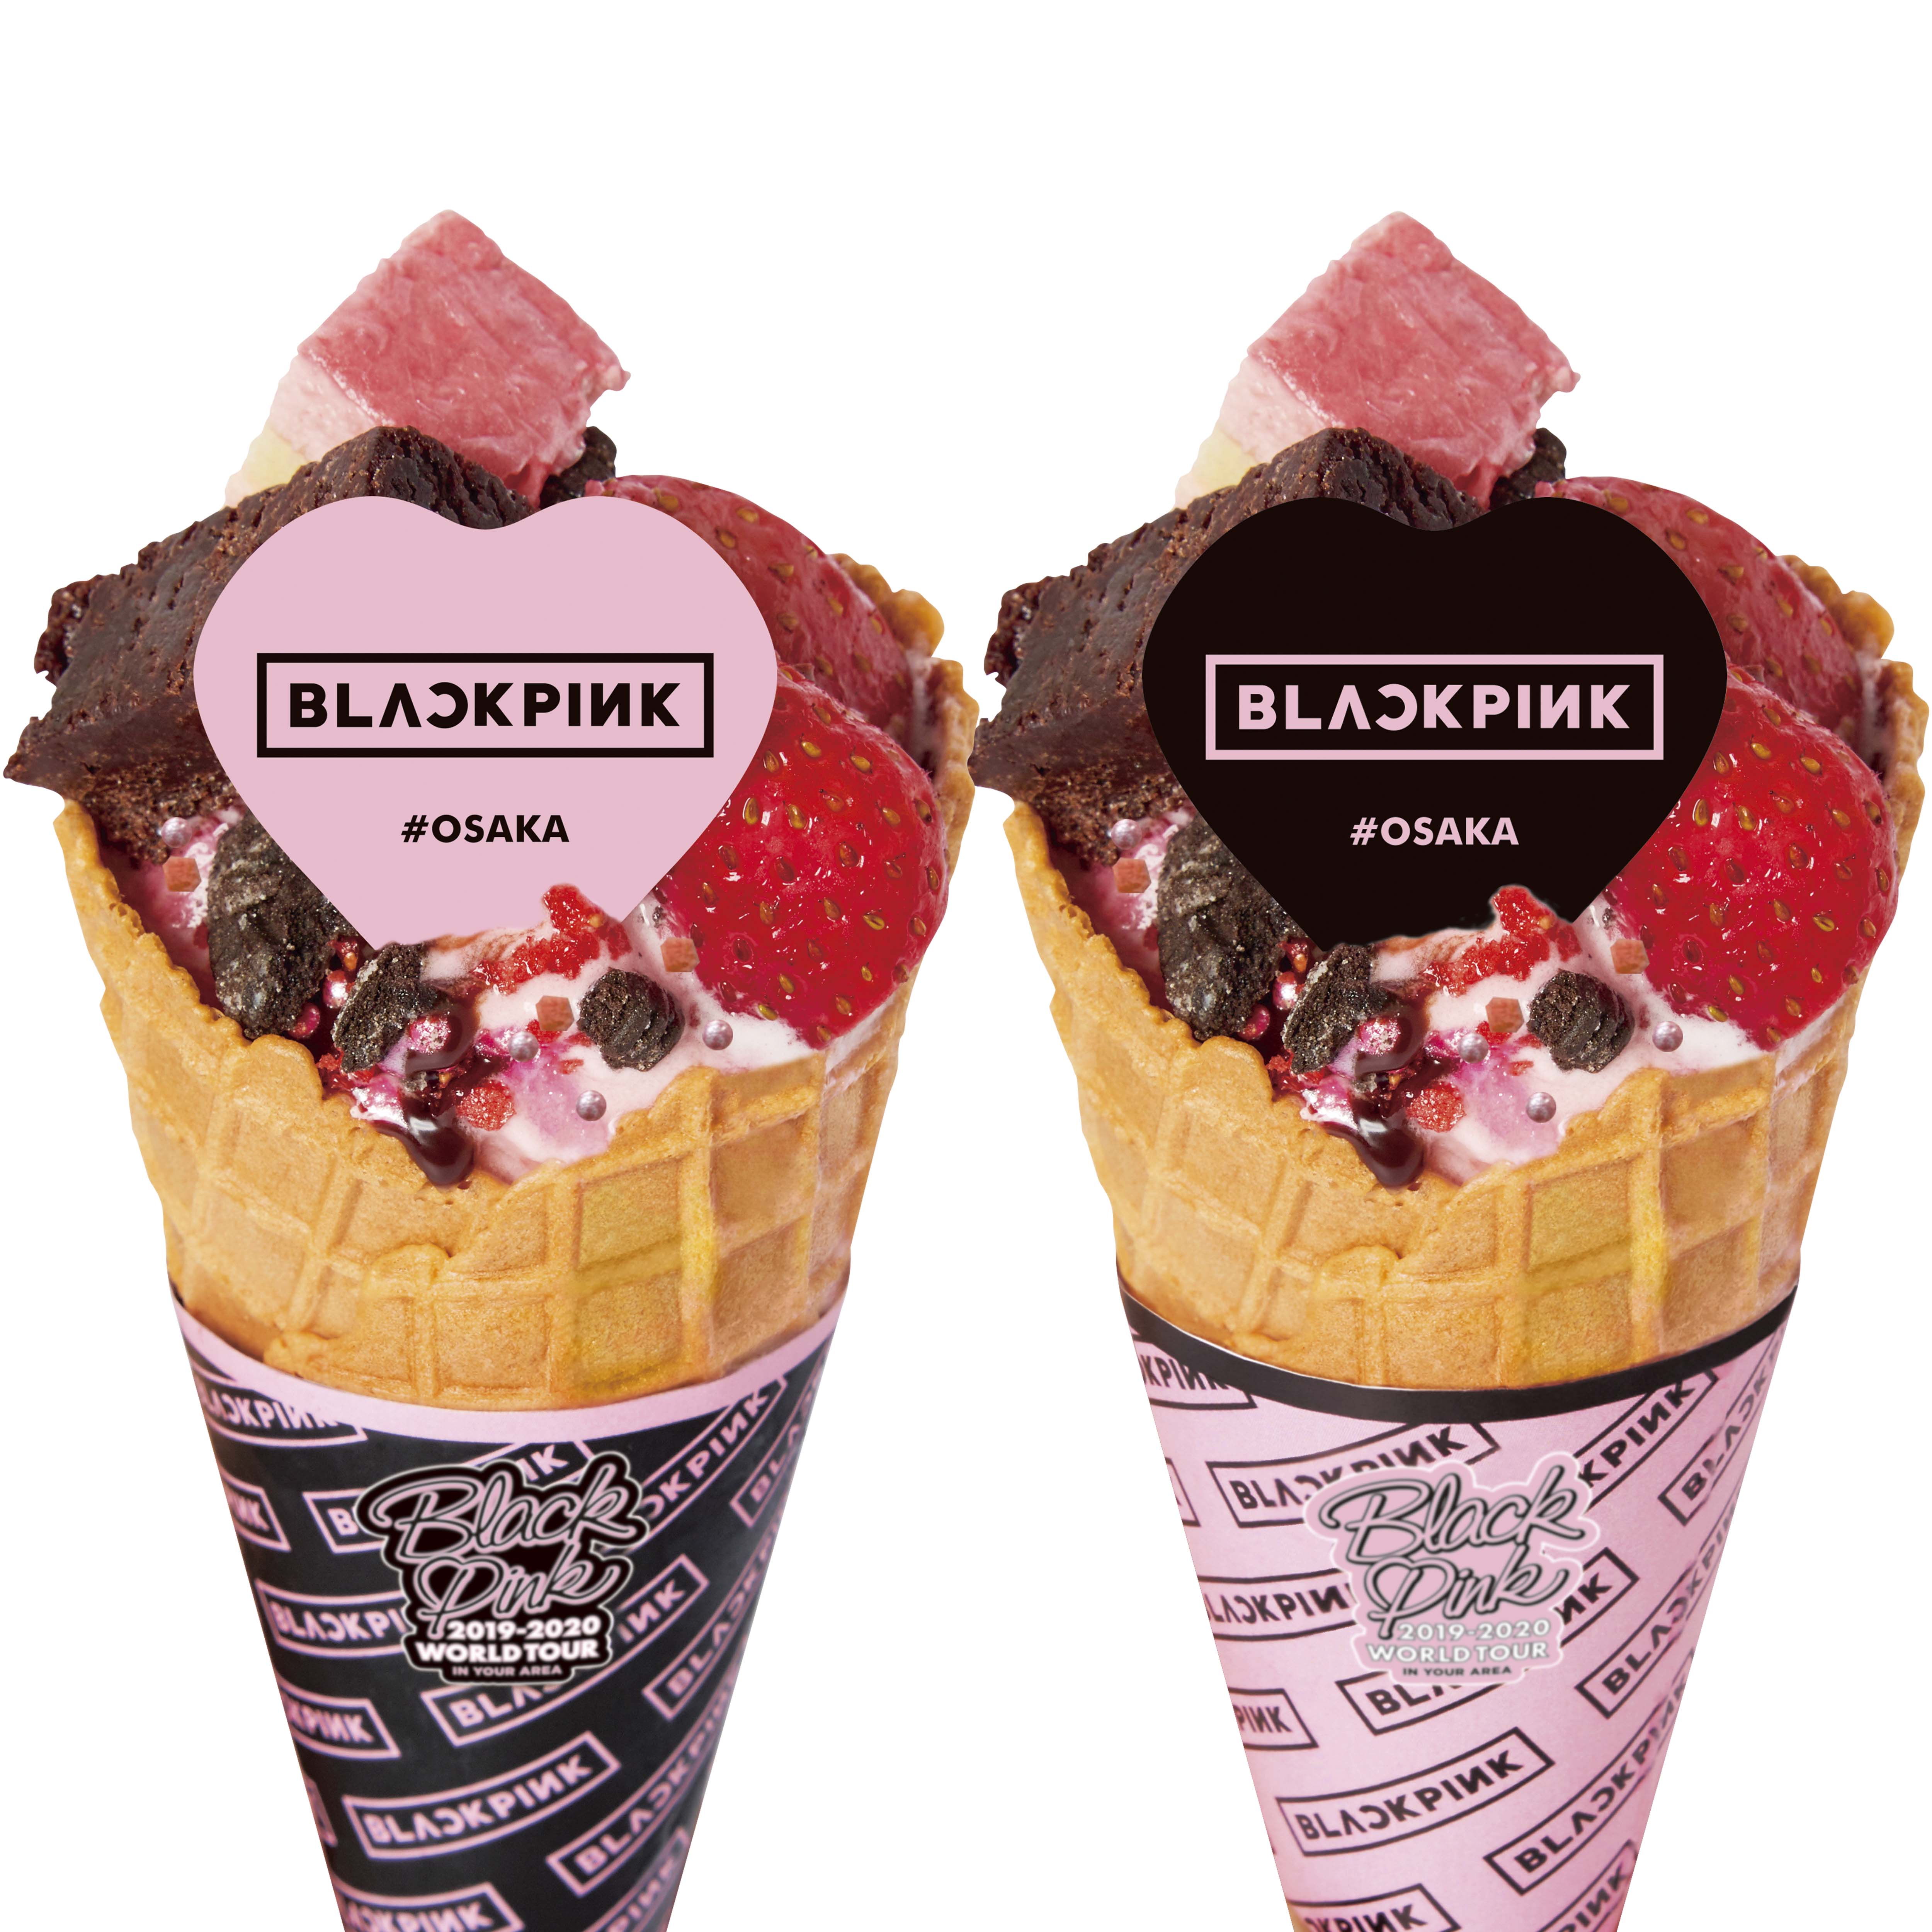 Blackpink 19 World Tour In Your Area Popup Store 大阪 での開催に合わせblackpinkコラボソフトクリーム限定販売決定